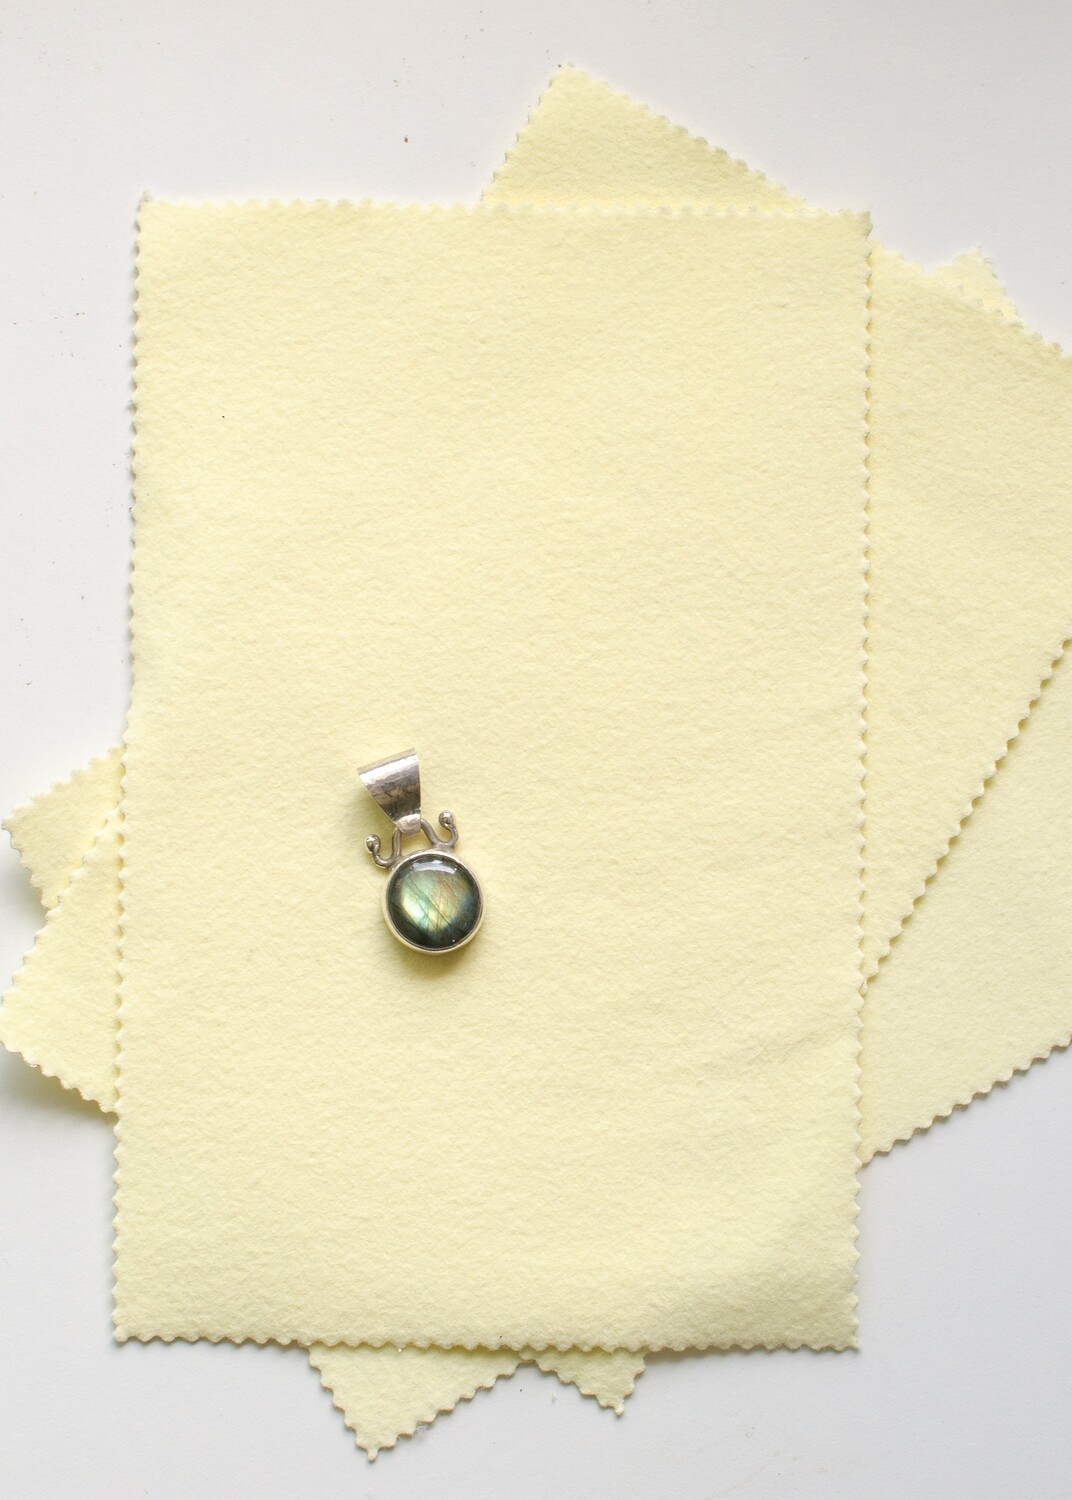 Large 5 x 7 Sunshine Jewelry Polishing Cleaning Cloth – Crystal